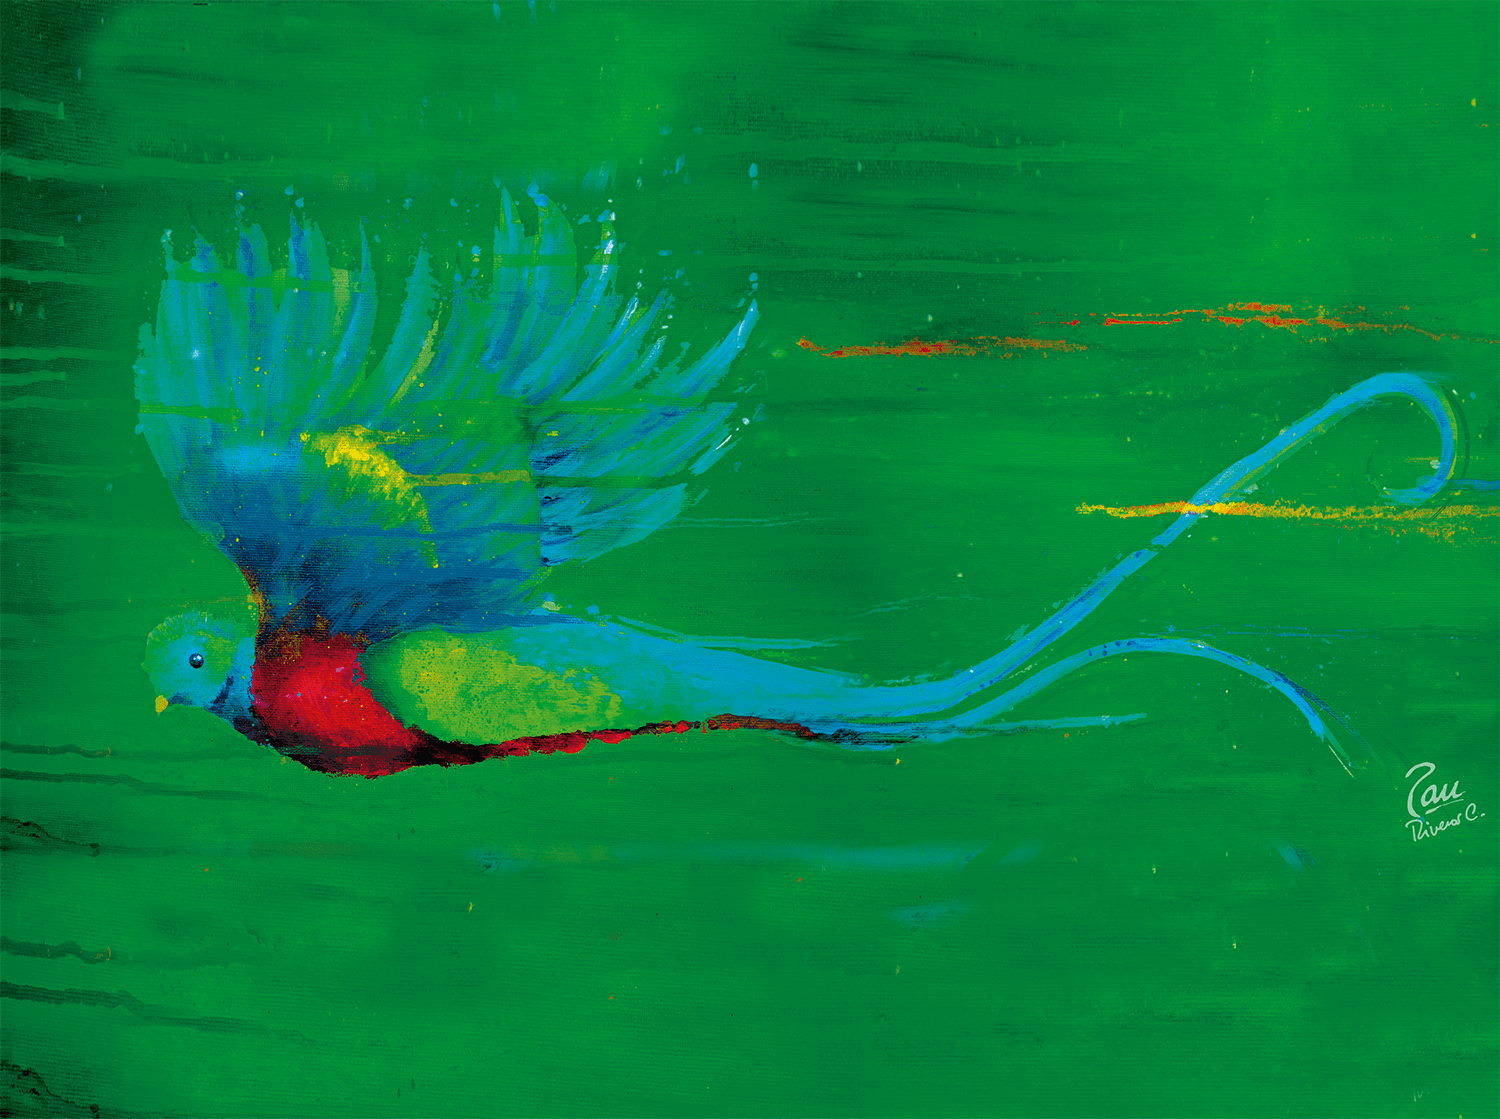 Quetzal freedom - 12 x 16"